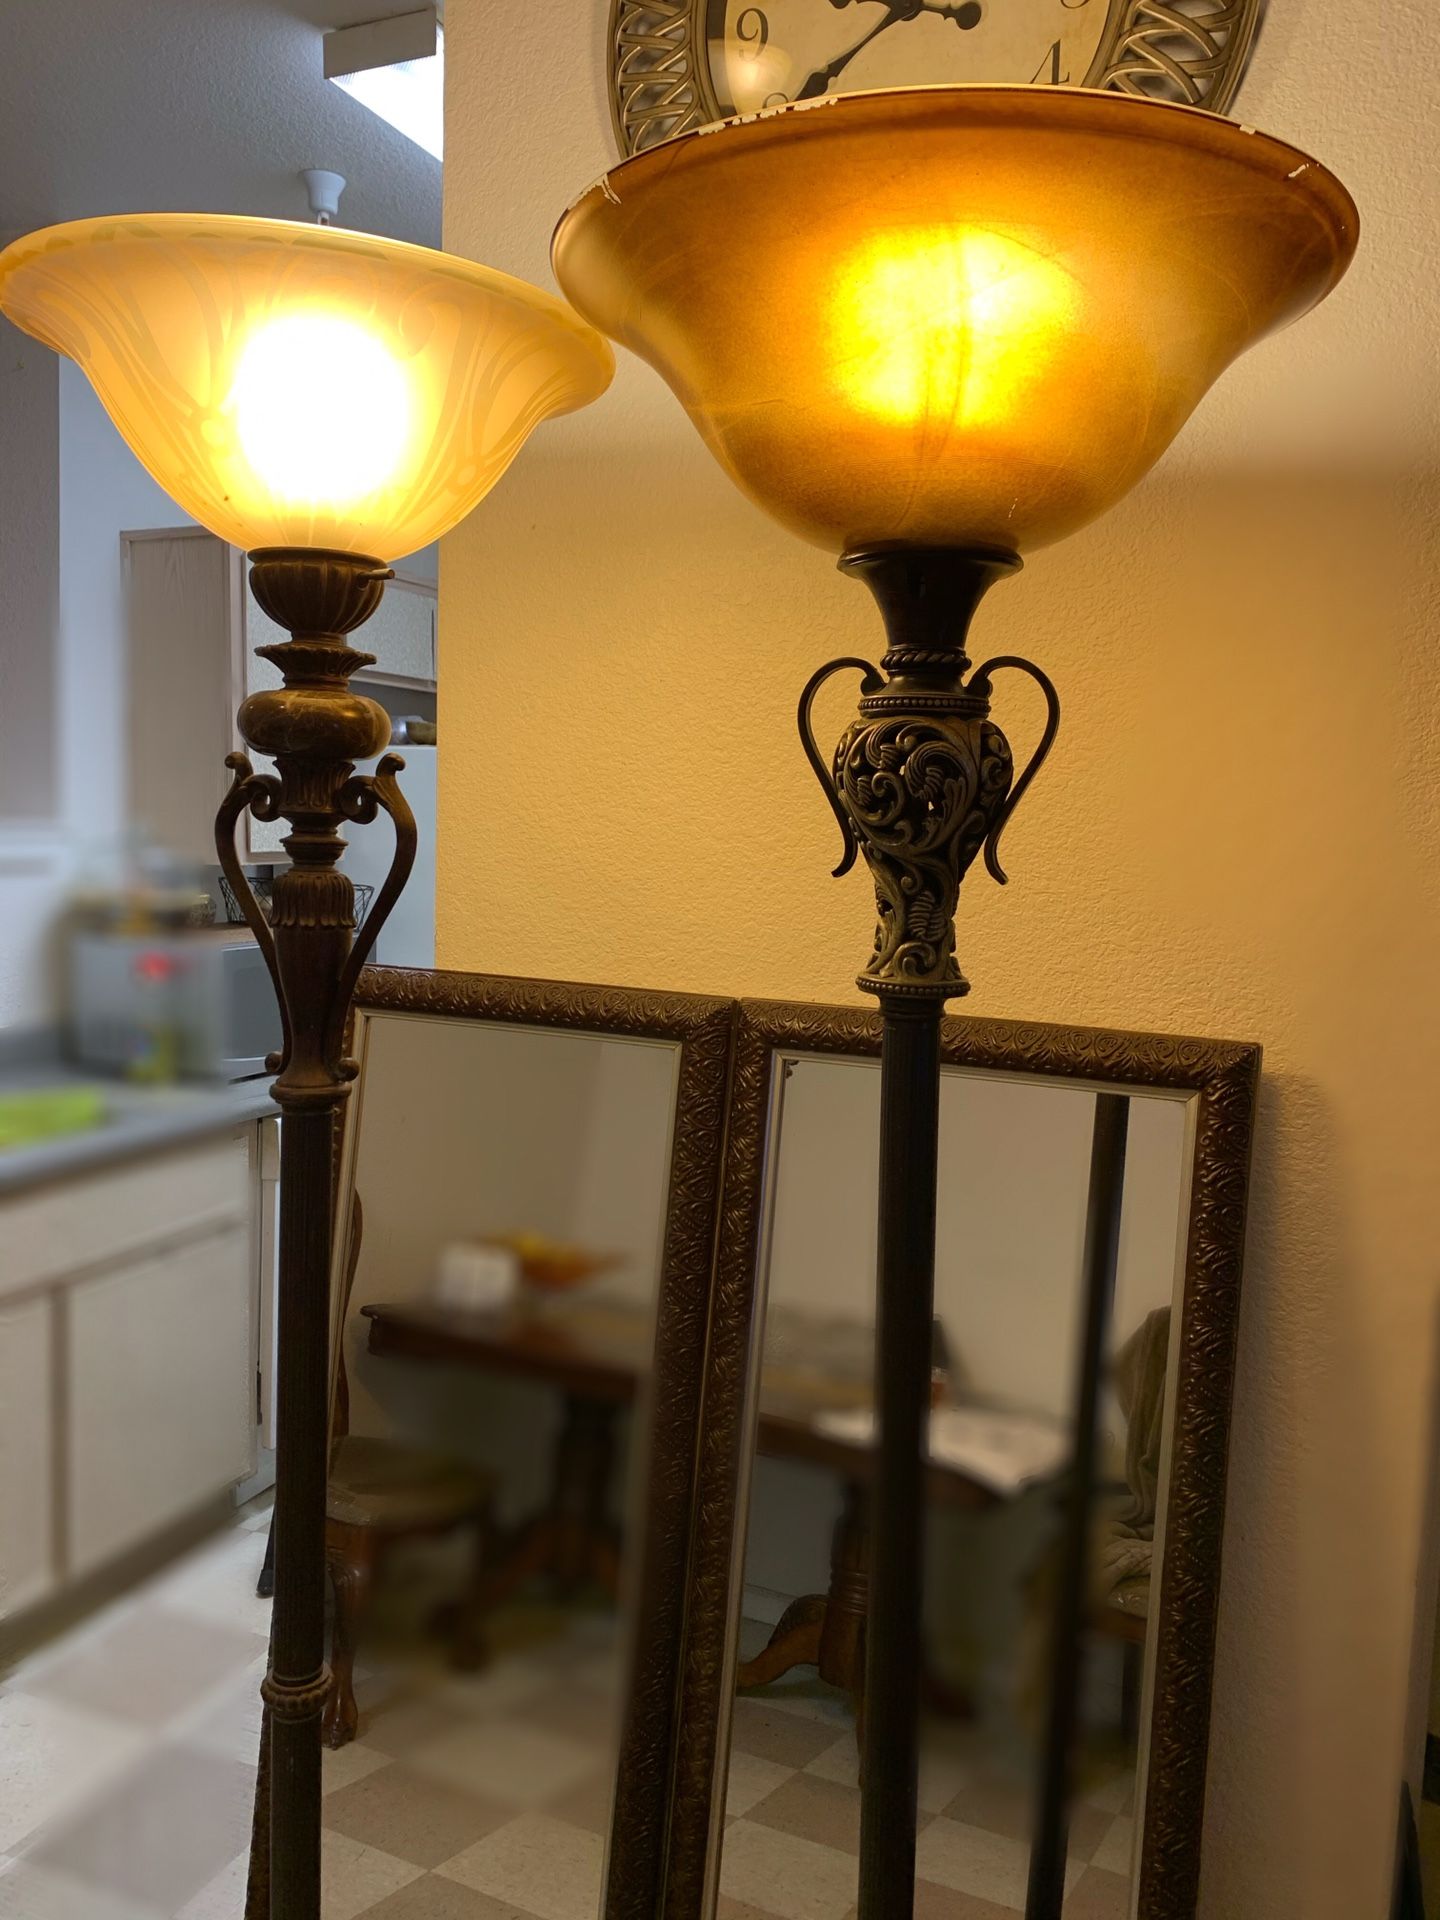 2 Vintage style floor lamps